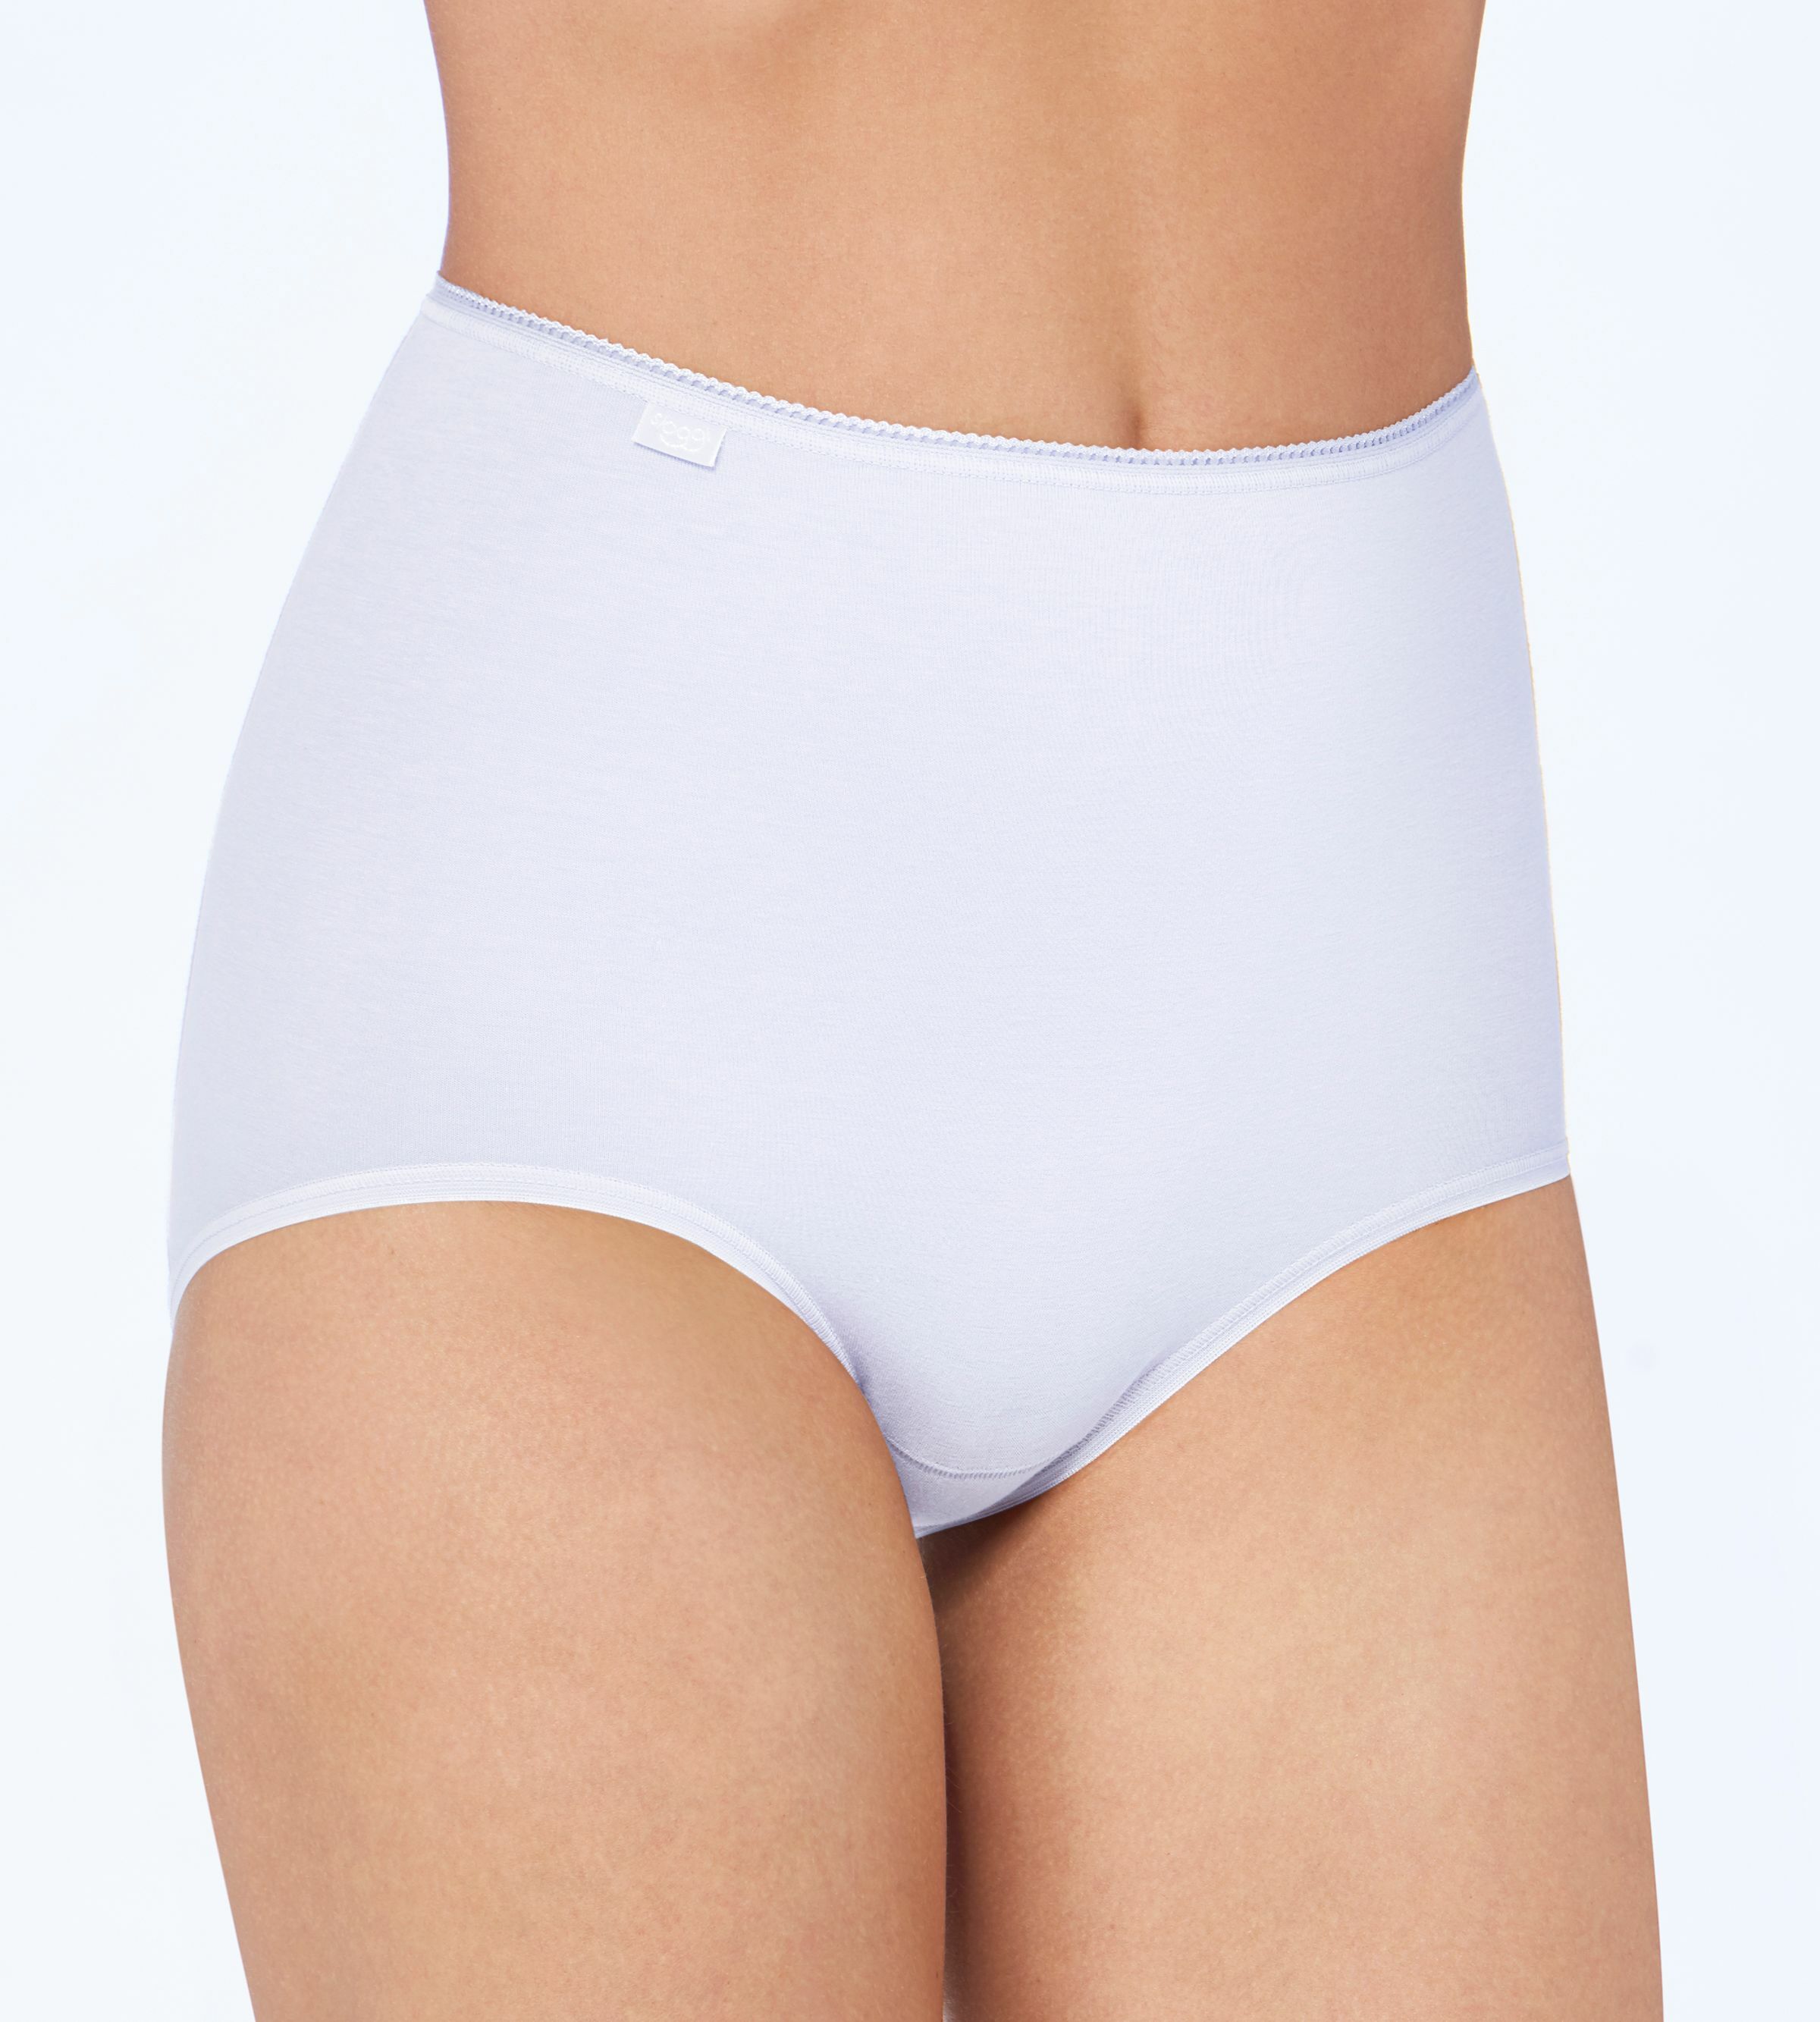 Sloggi size 26 Basic Maxi Briefs knickers panties pants cotton rich White